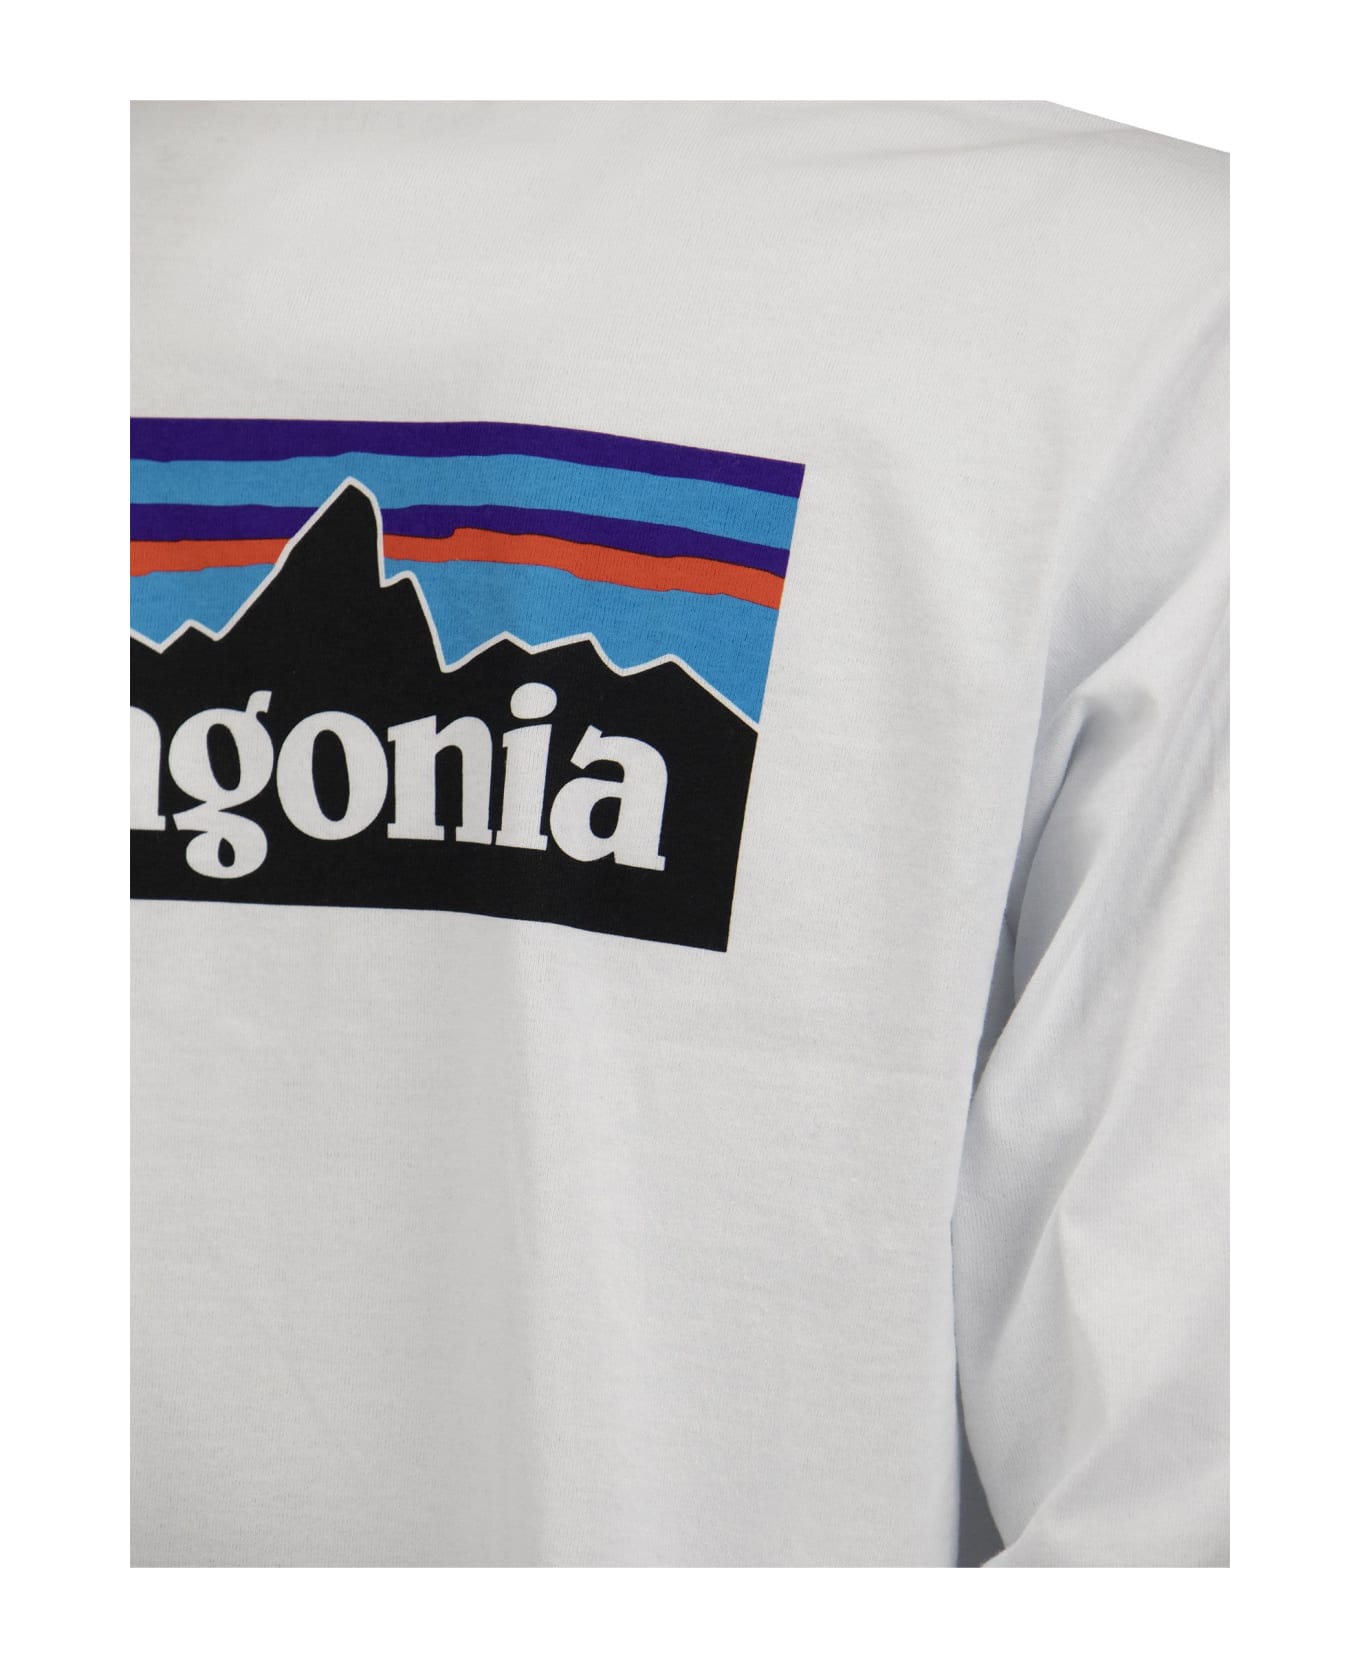 Patagonia T-shirt With Logo Long Sleeves - White